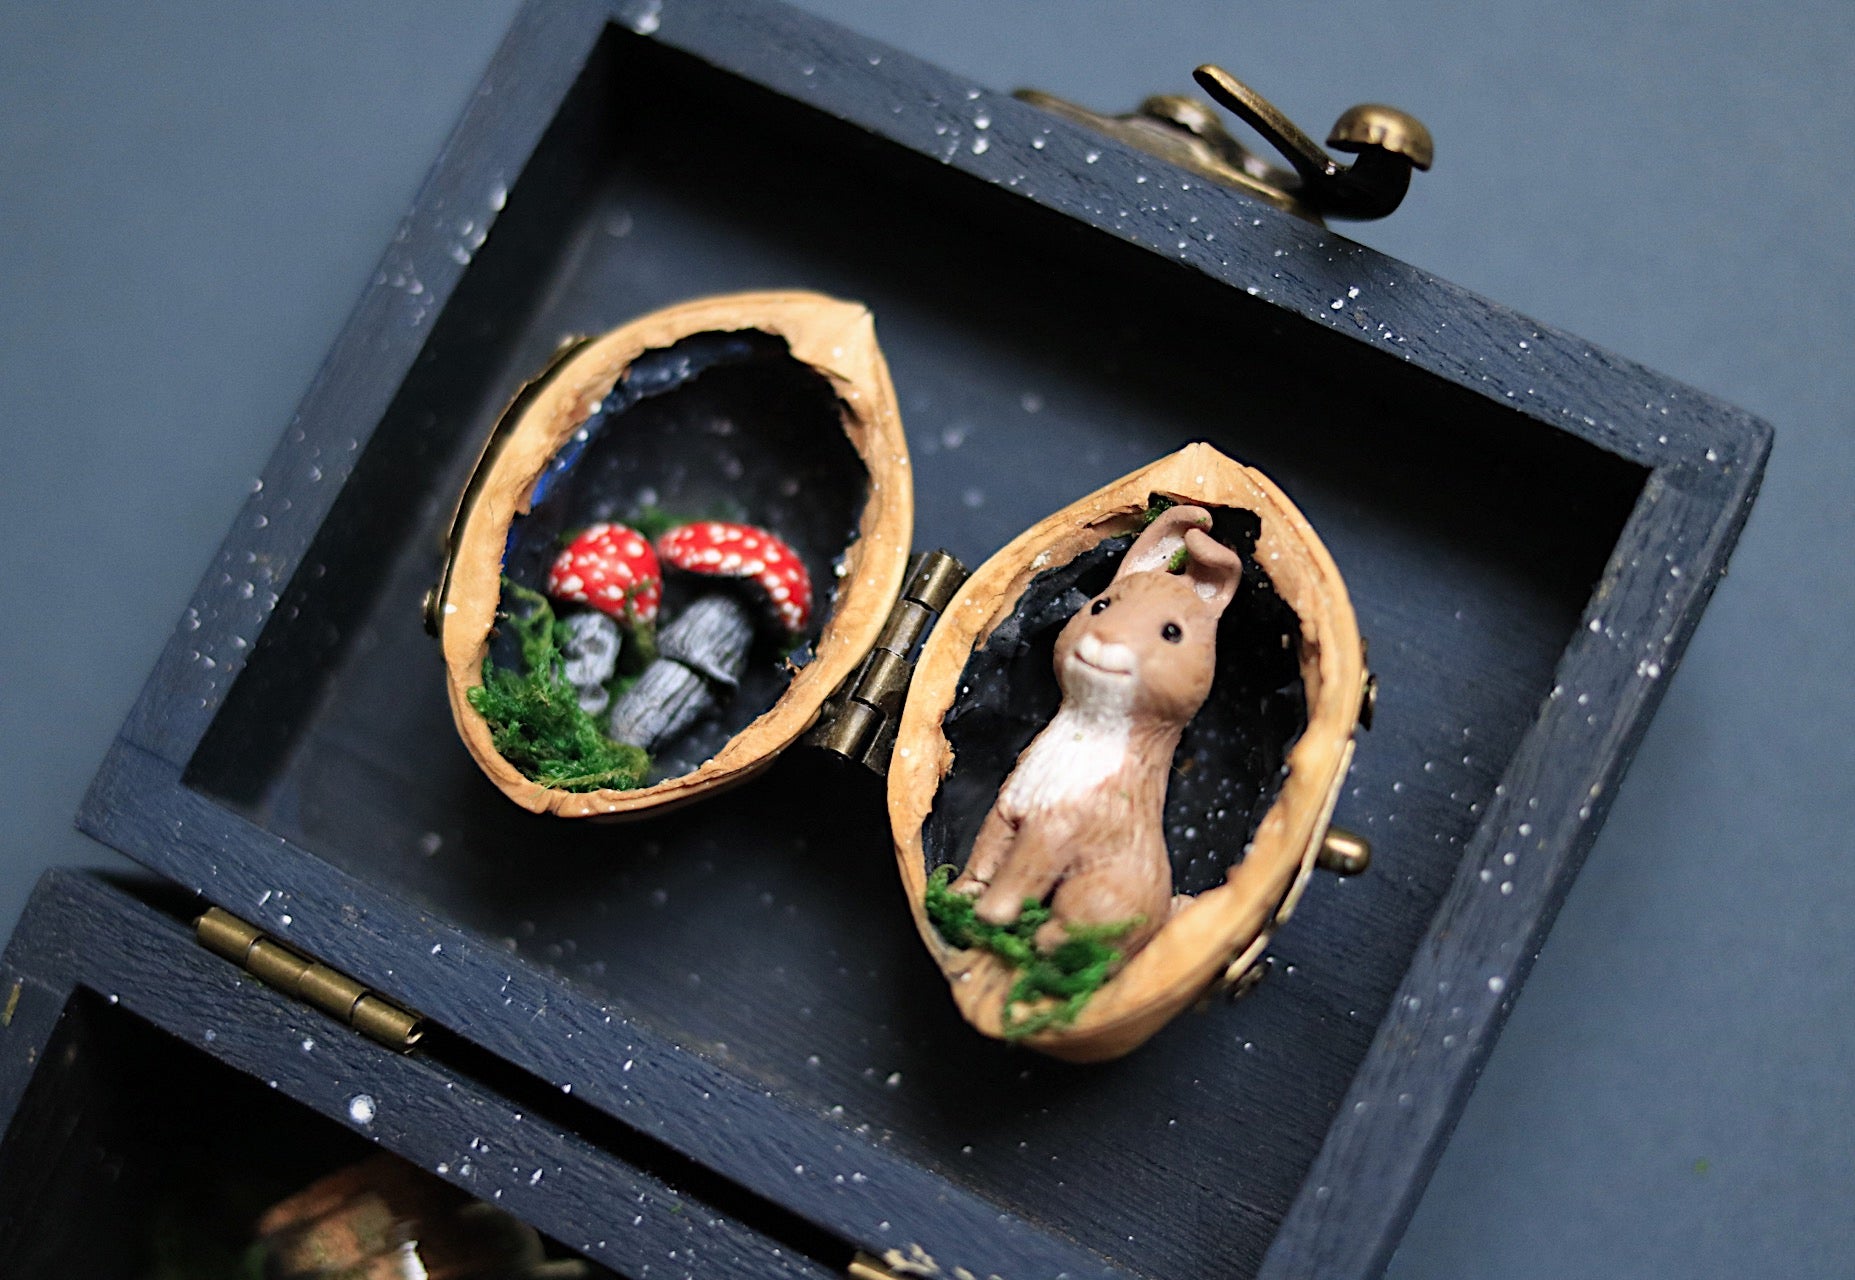 Enchanted Forest Box - Rabbit